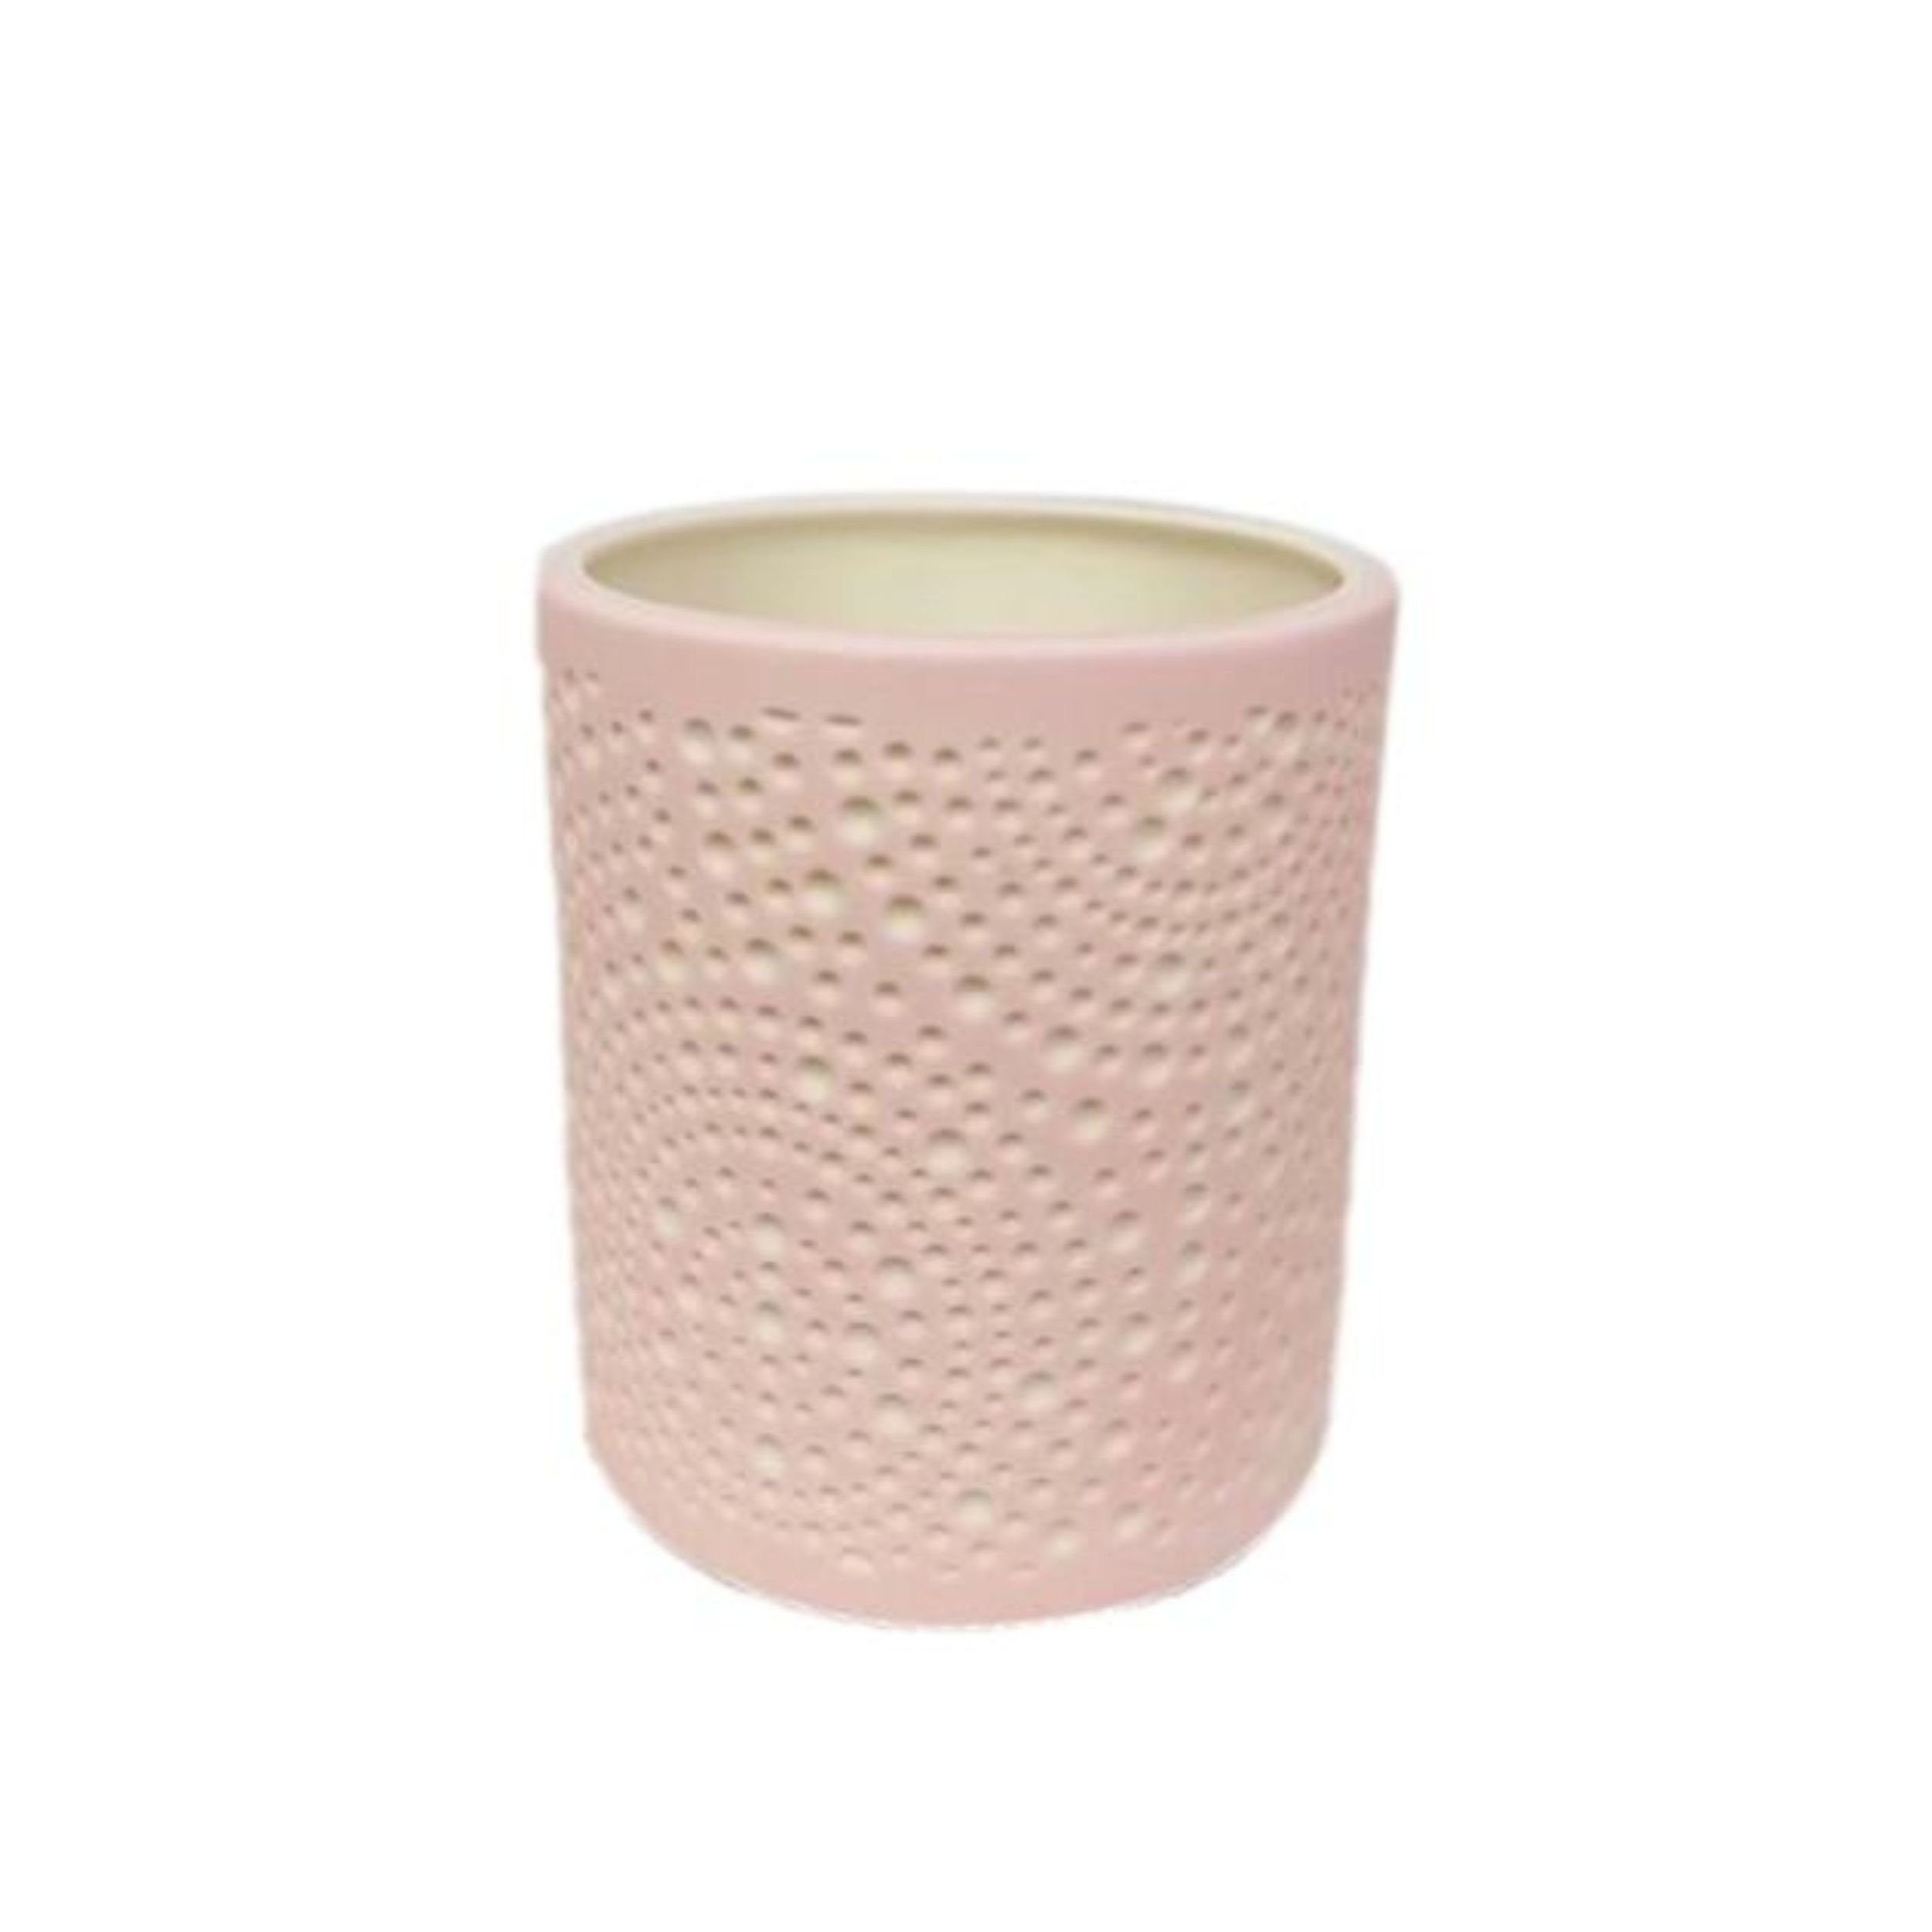 Home Society B.V. Windlicht Porzellan Teelichthalter in Rosa 8cm